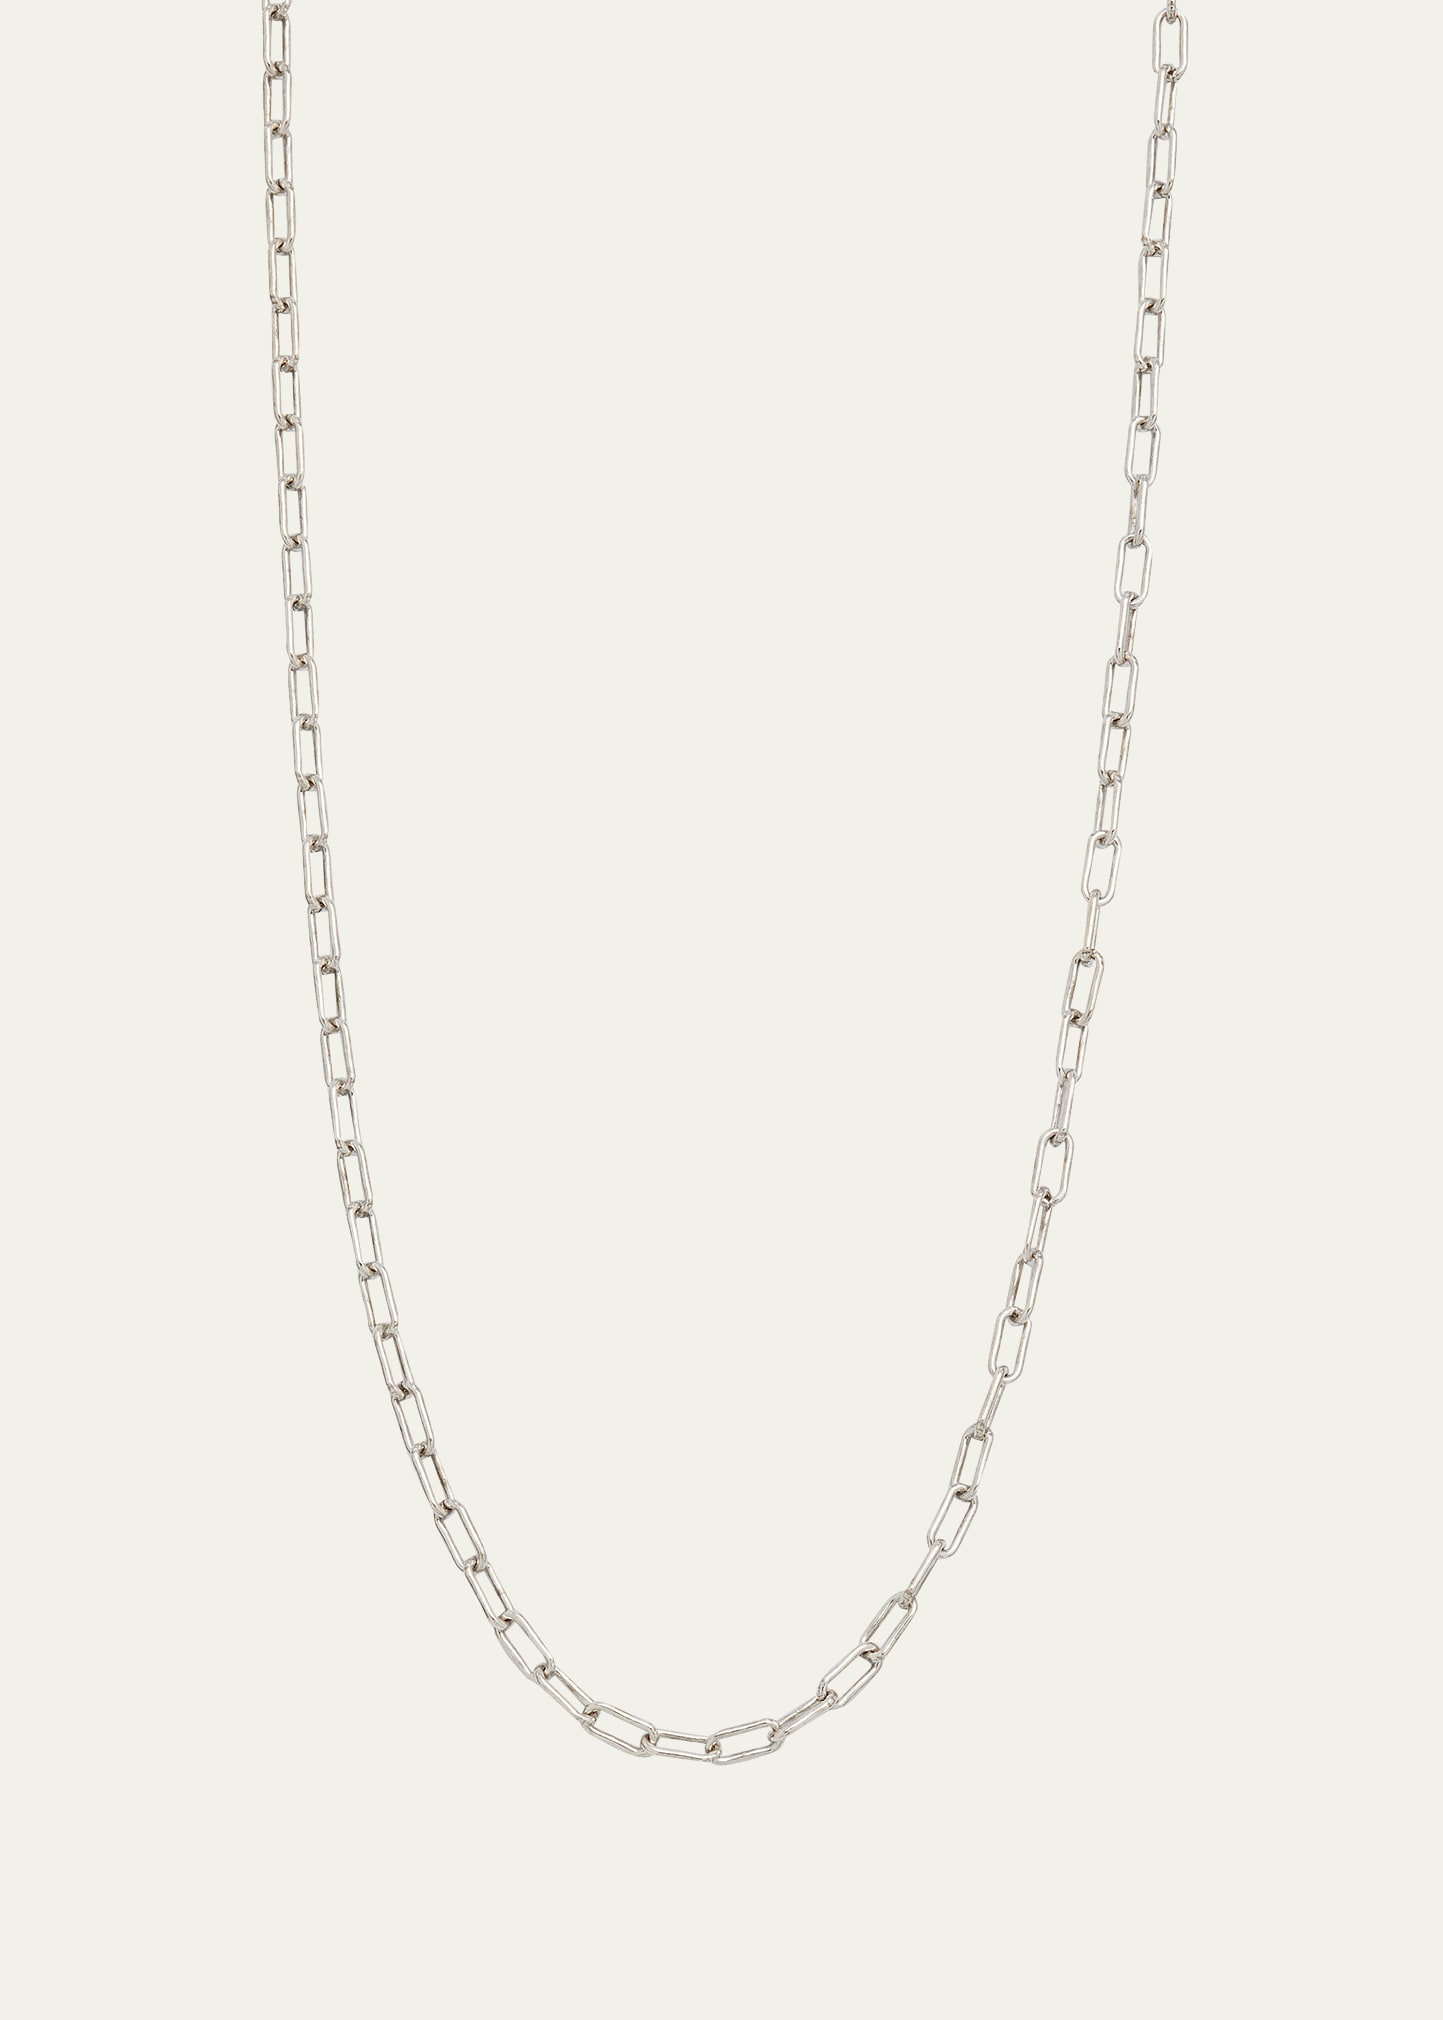 Rectangular Long Chain Necklace, 42"L